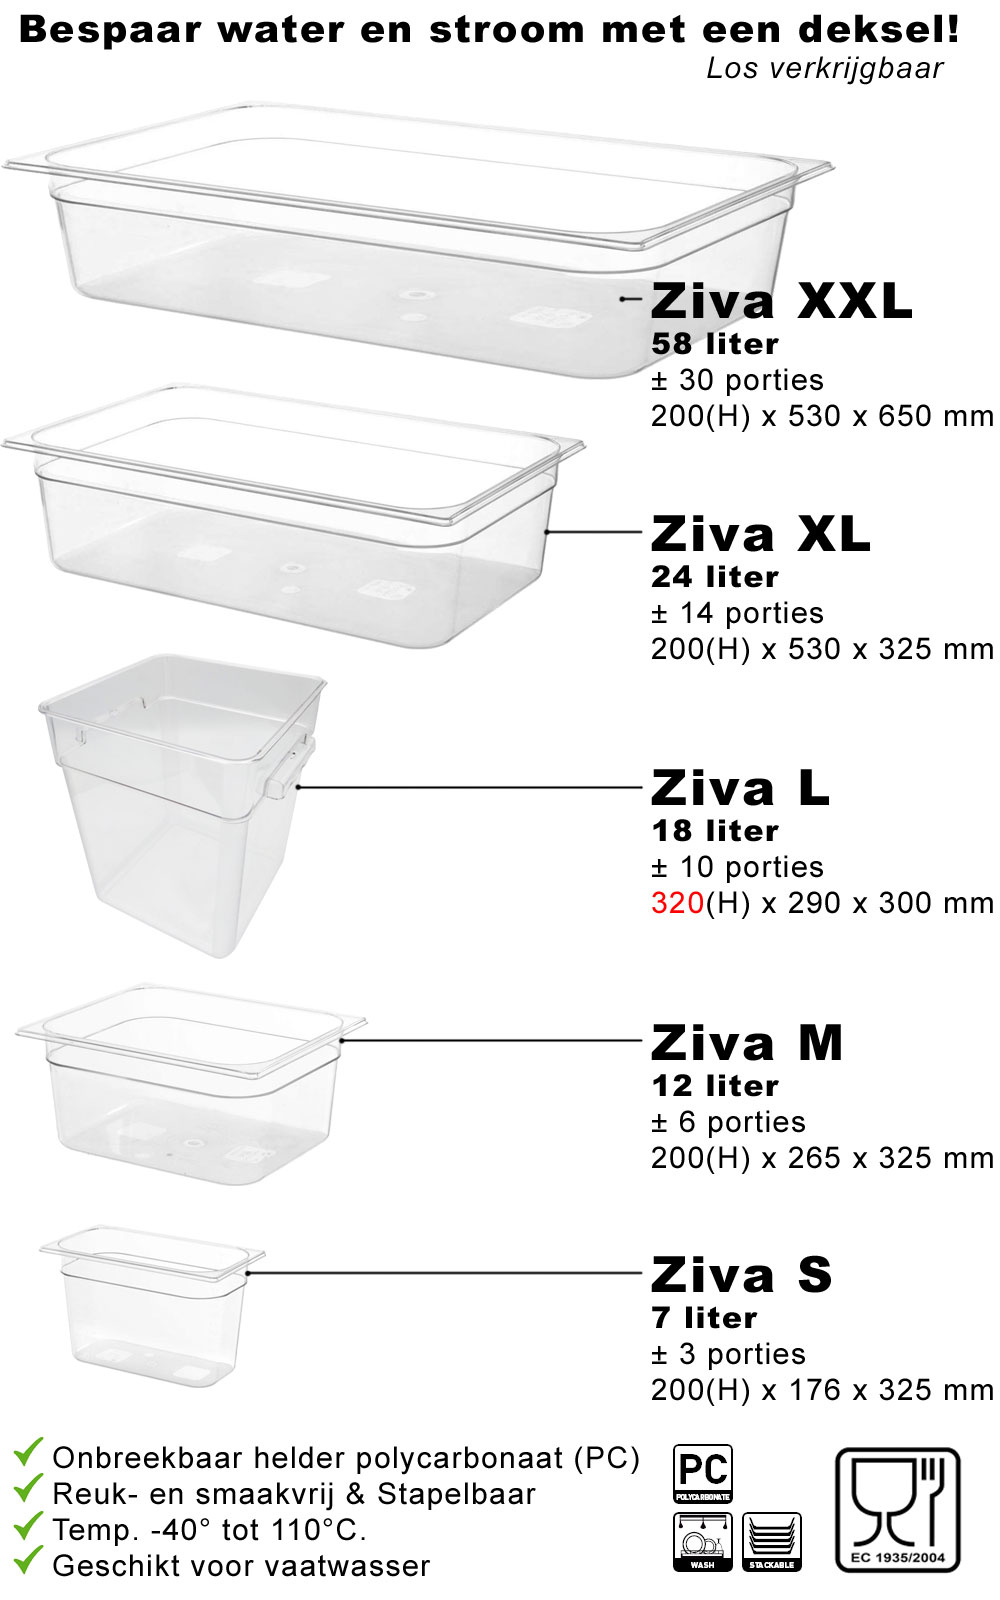 Ziva Sense + Ziva SlimTouch + 18 liter bundel